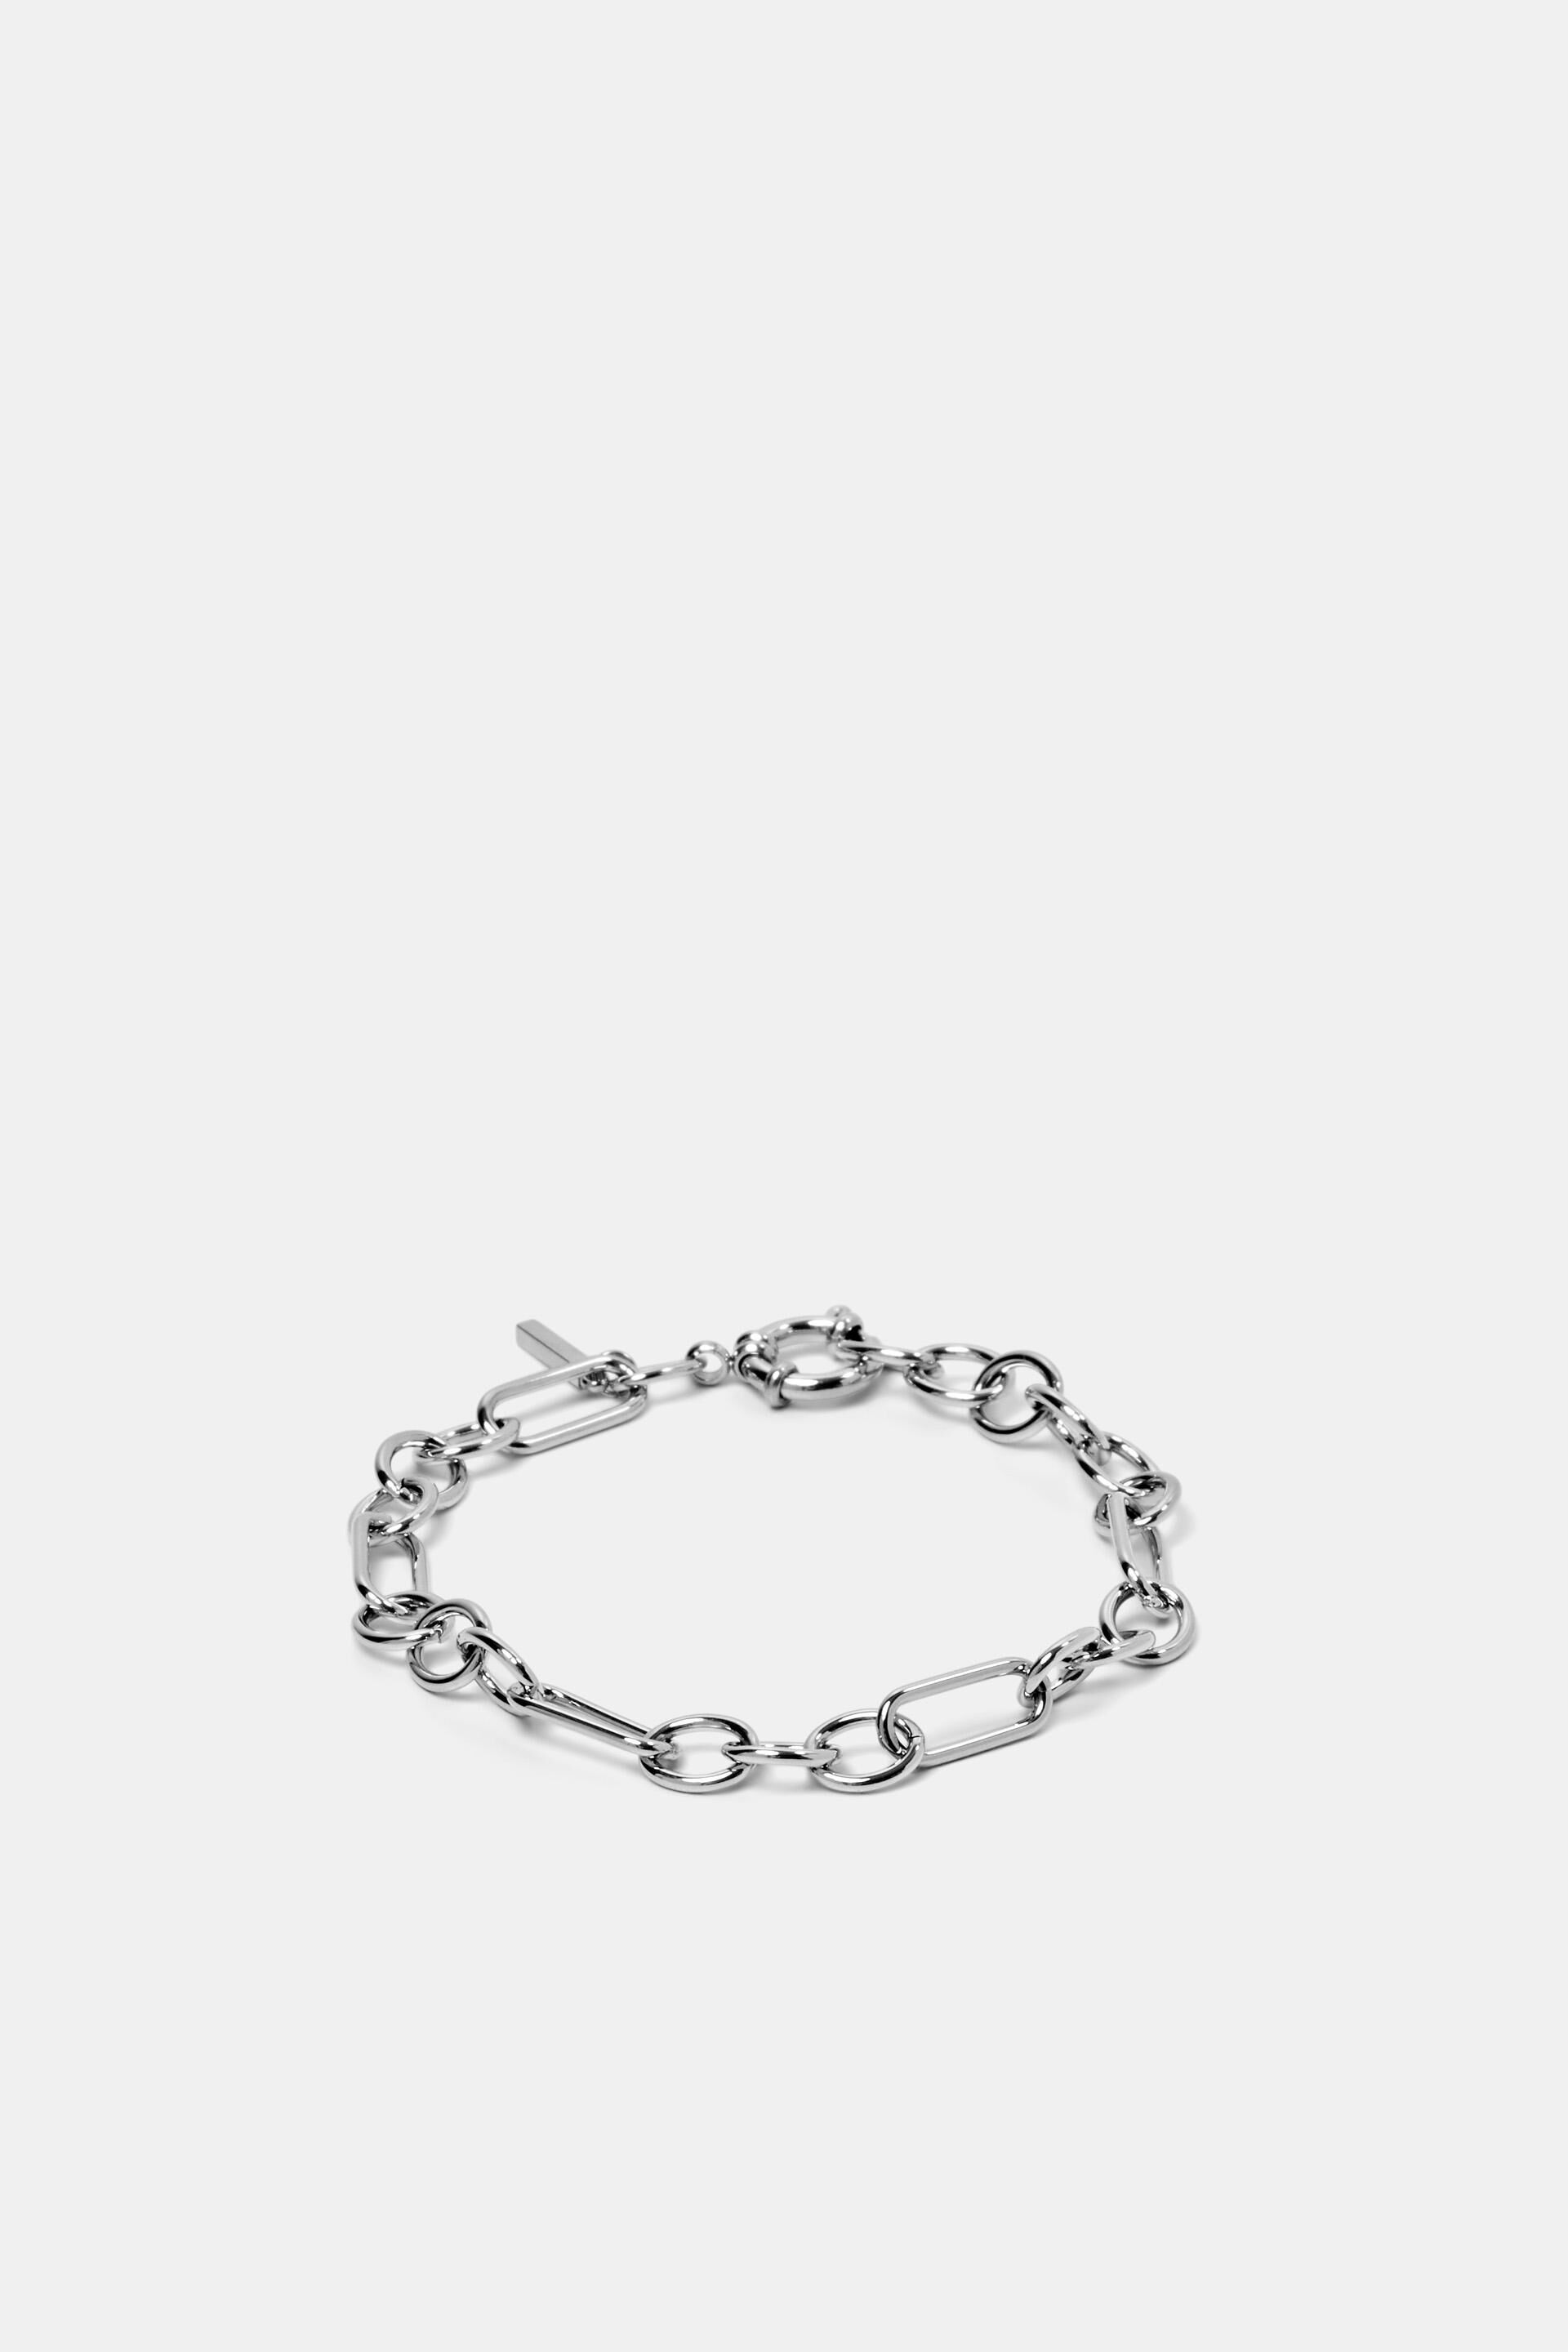 Esprit bracelet, Link stainless steel